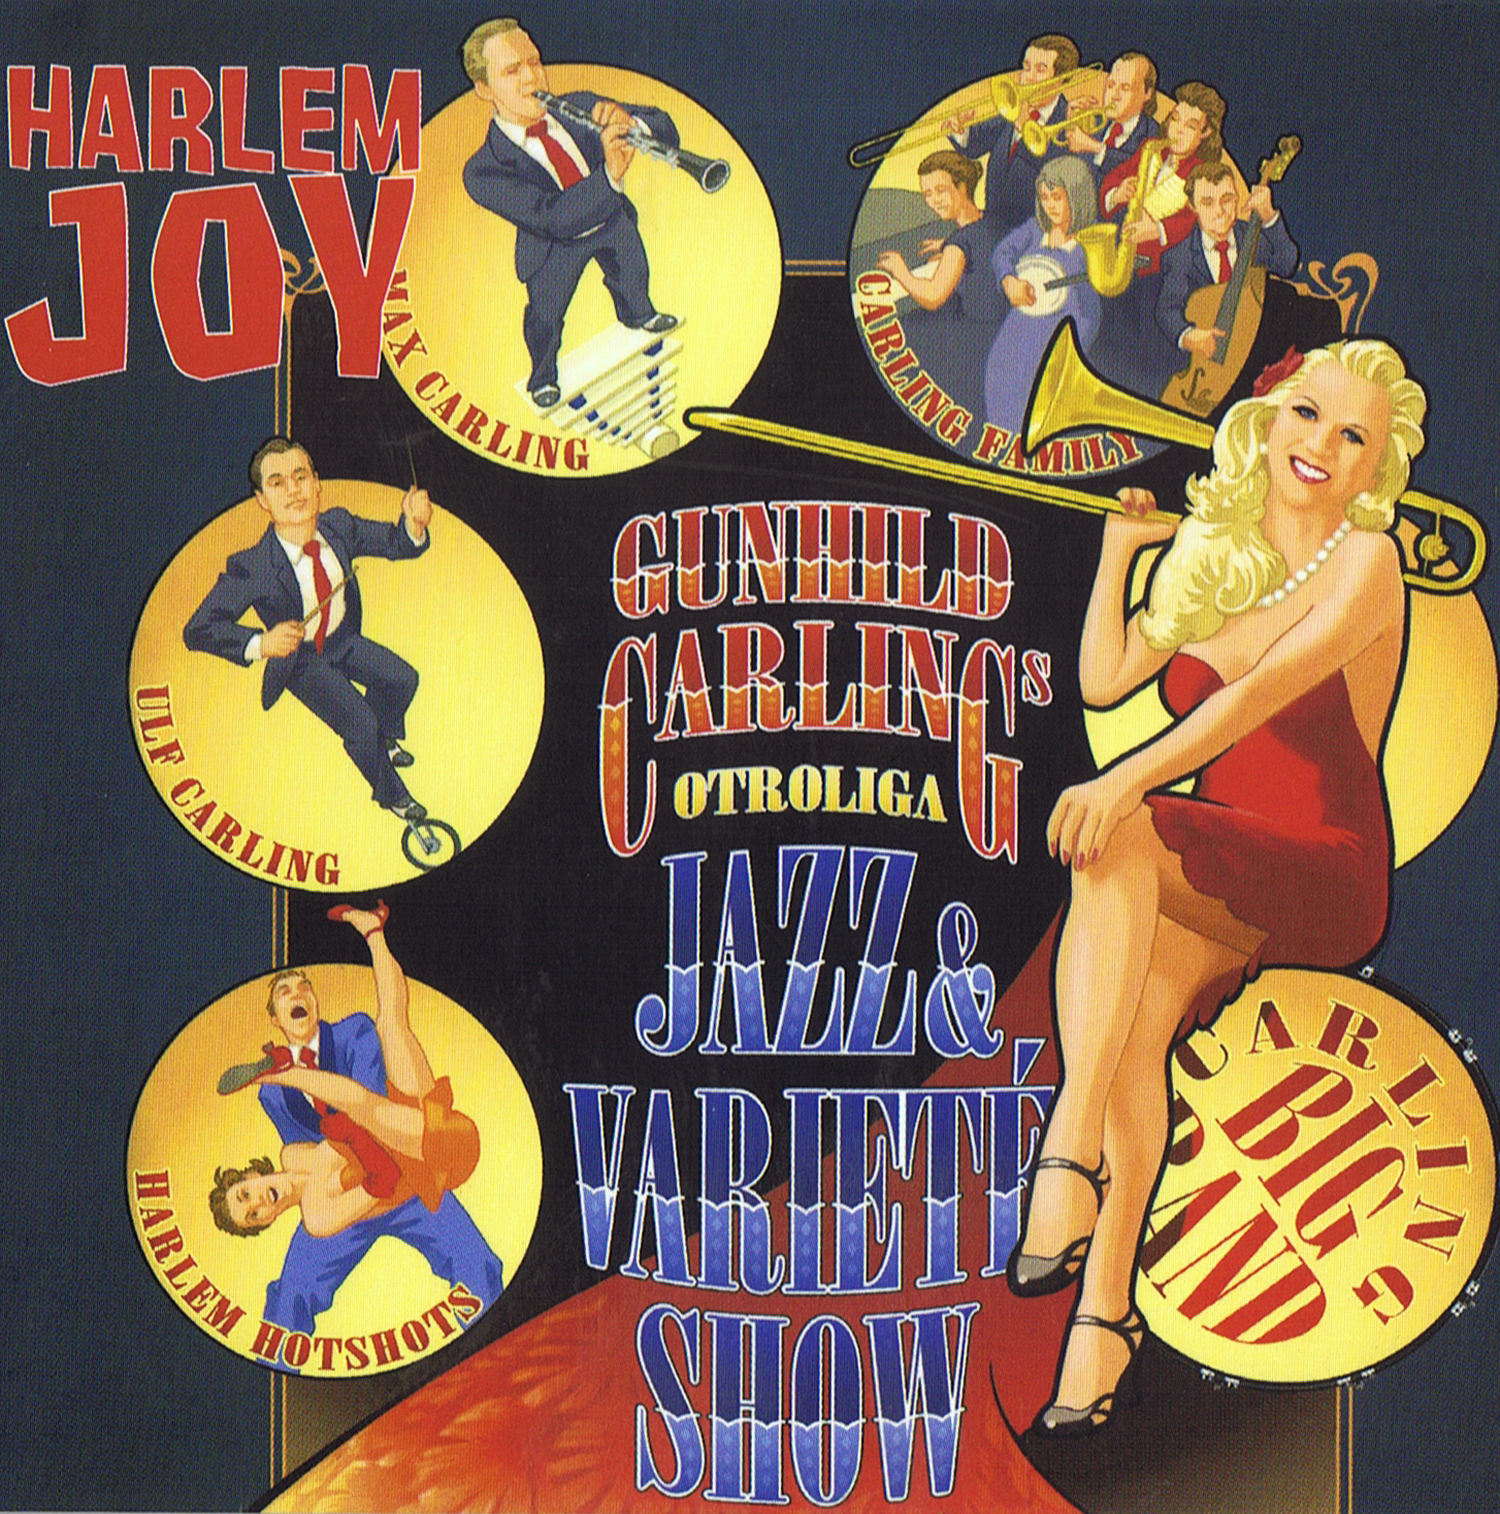 Gunhild Carling & Carling Big Band - Harlem Joy - CD-RSD15